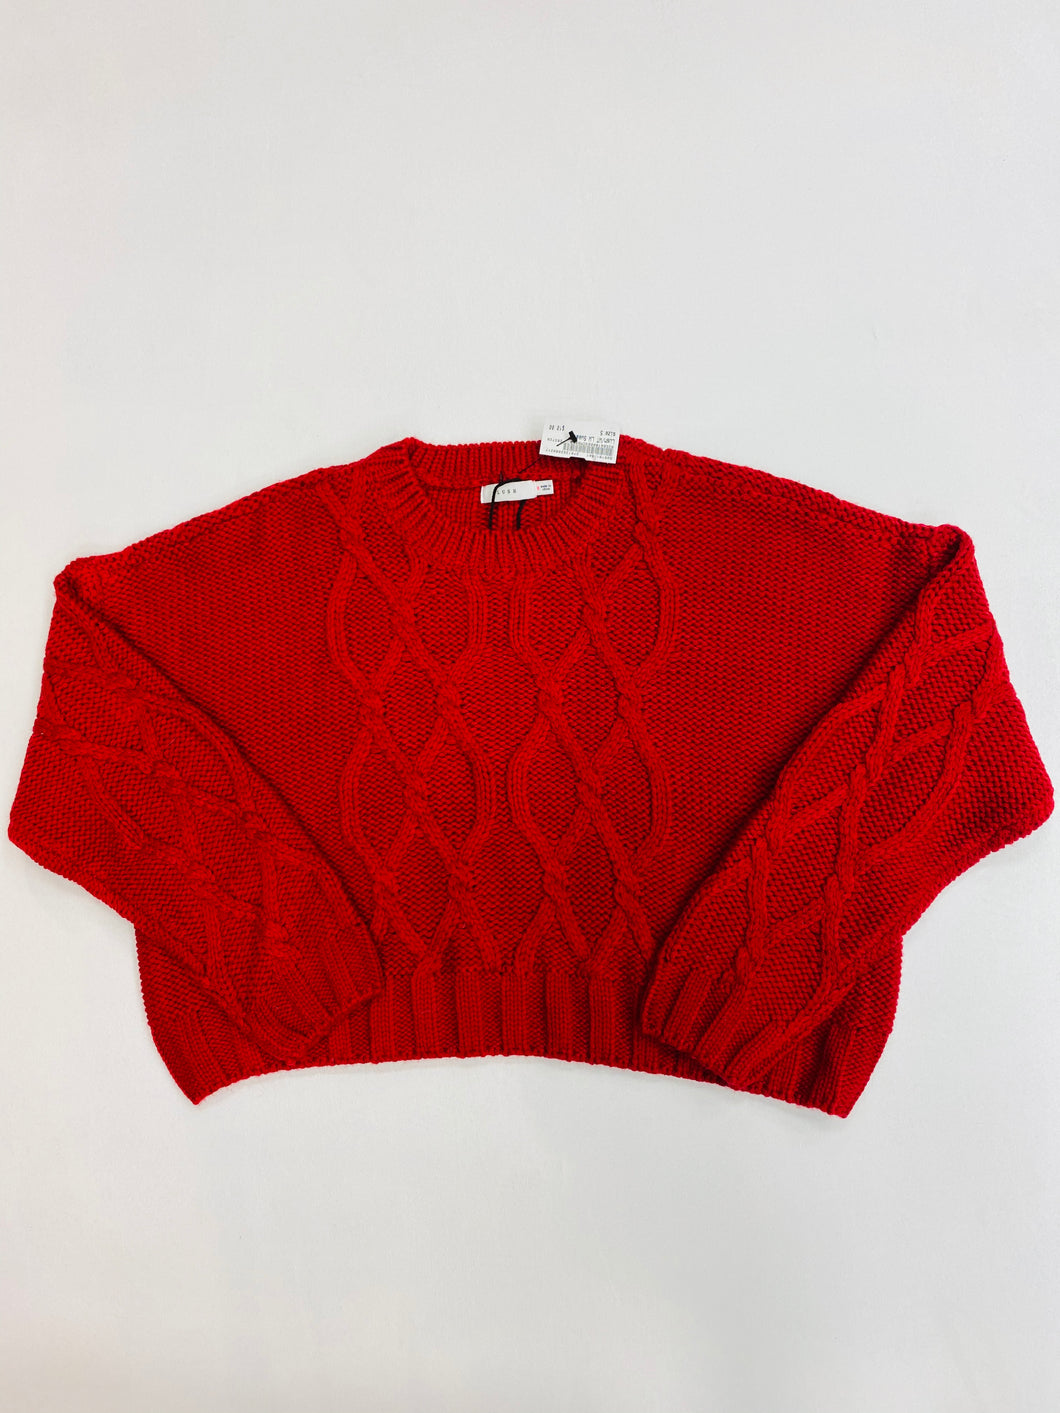 Lush Womens Sweater Small-12021B80-909F-4A8F-9C23-62AC77969A86.jpeg